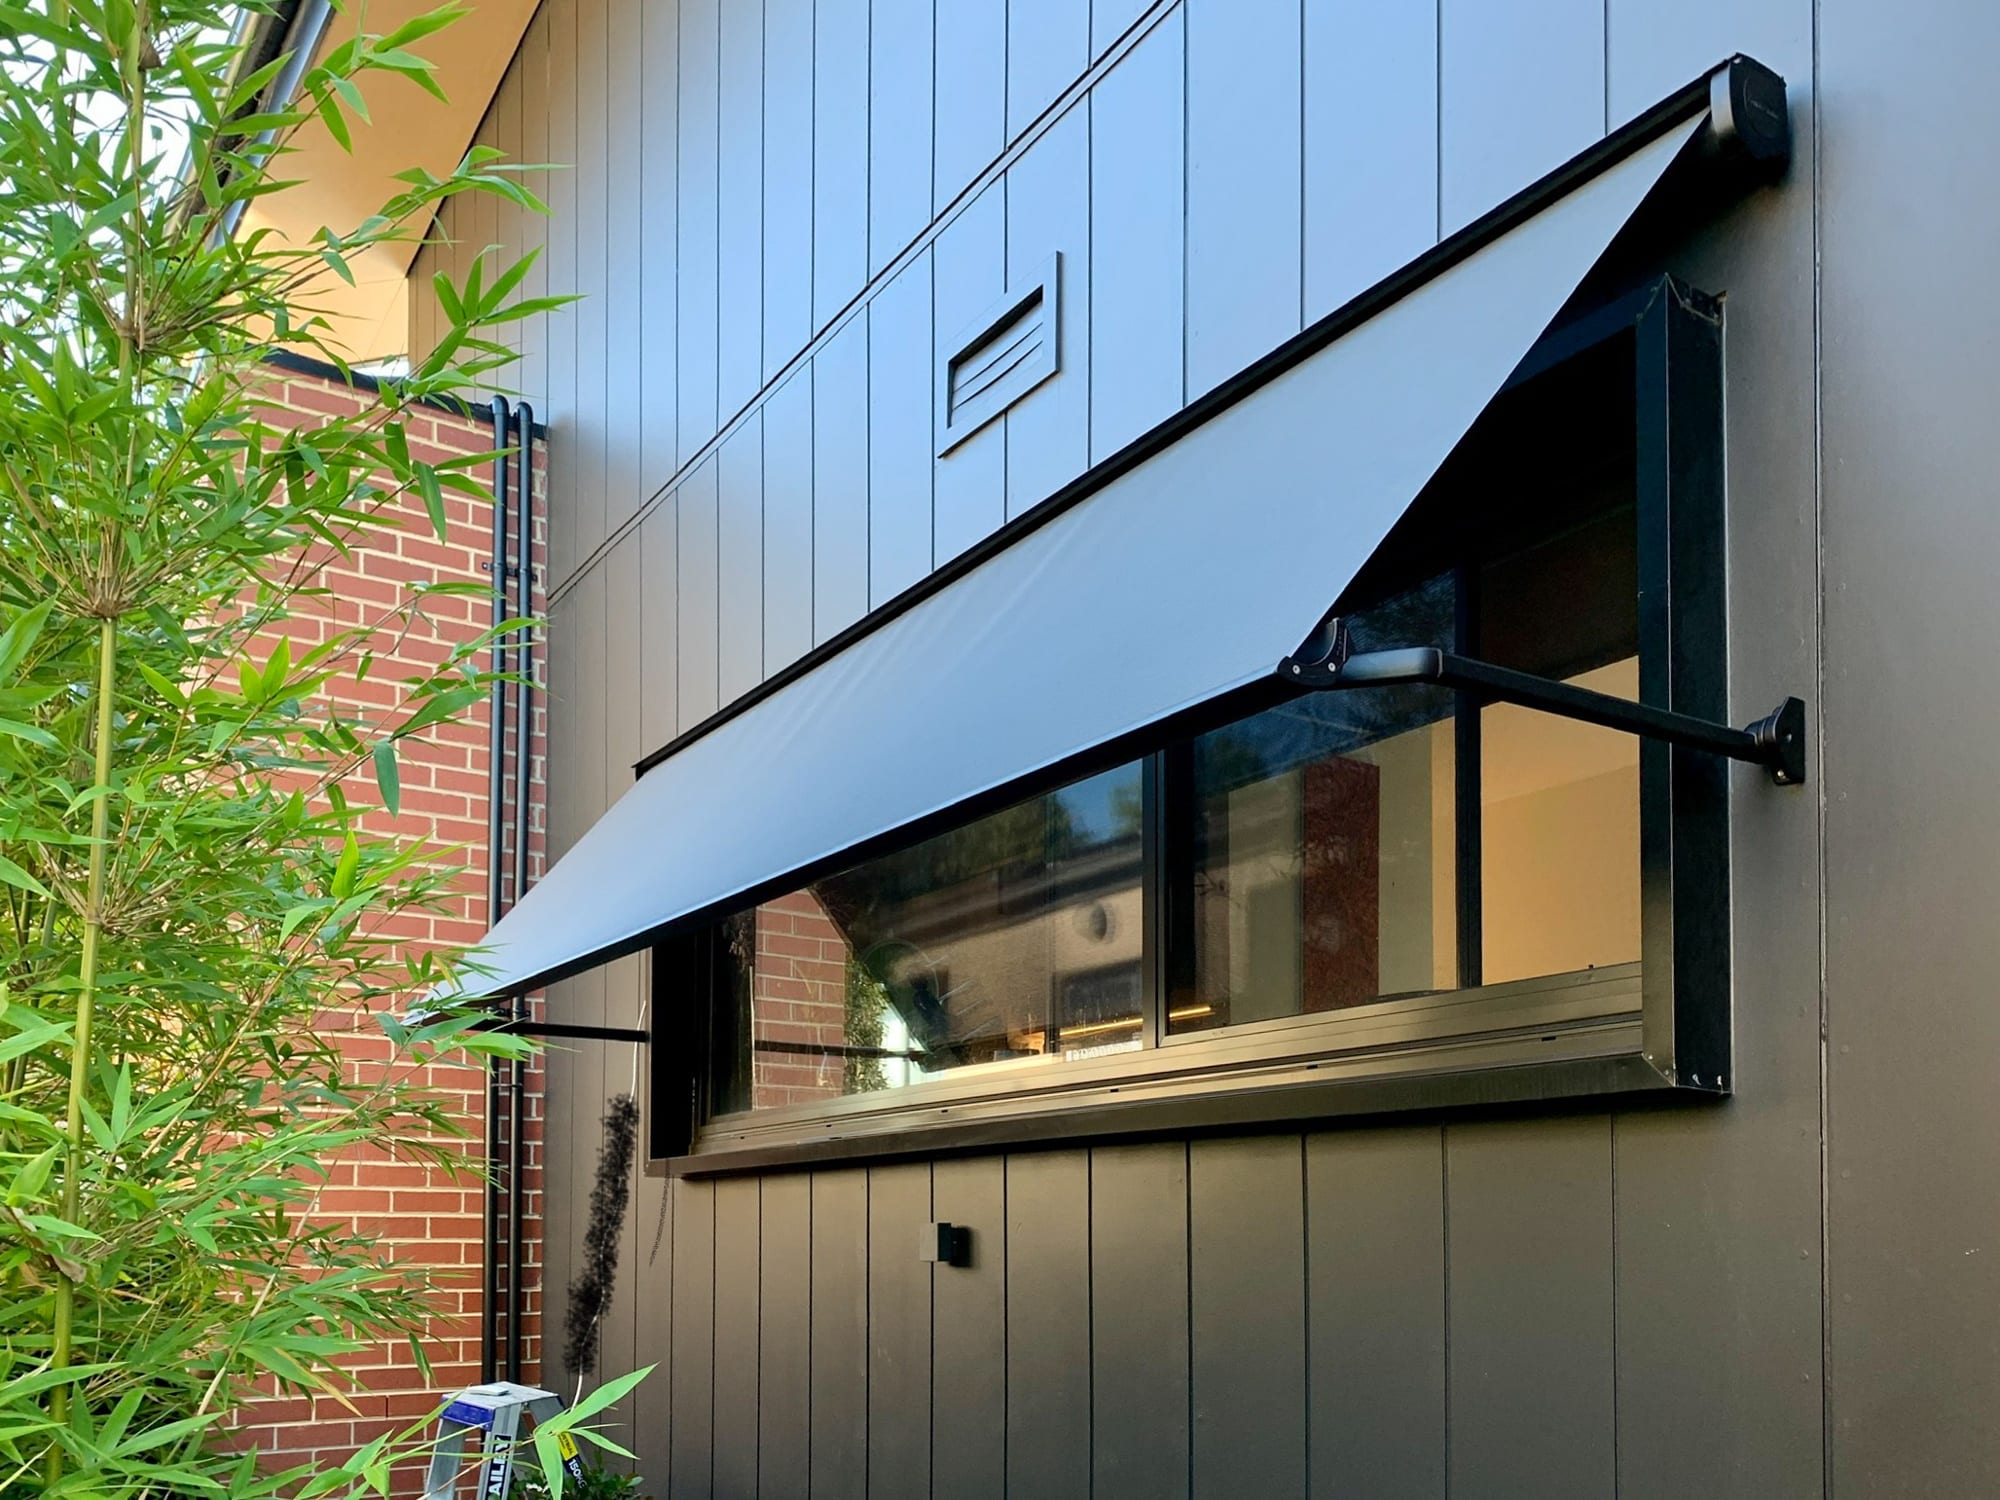 Improve energy efficient home design using External Blinds